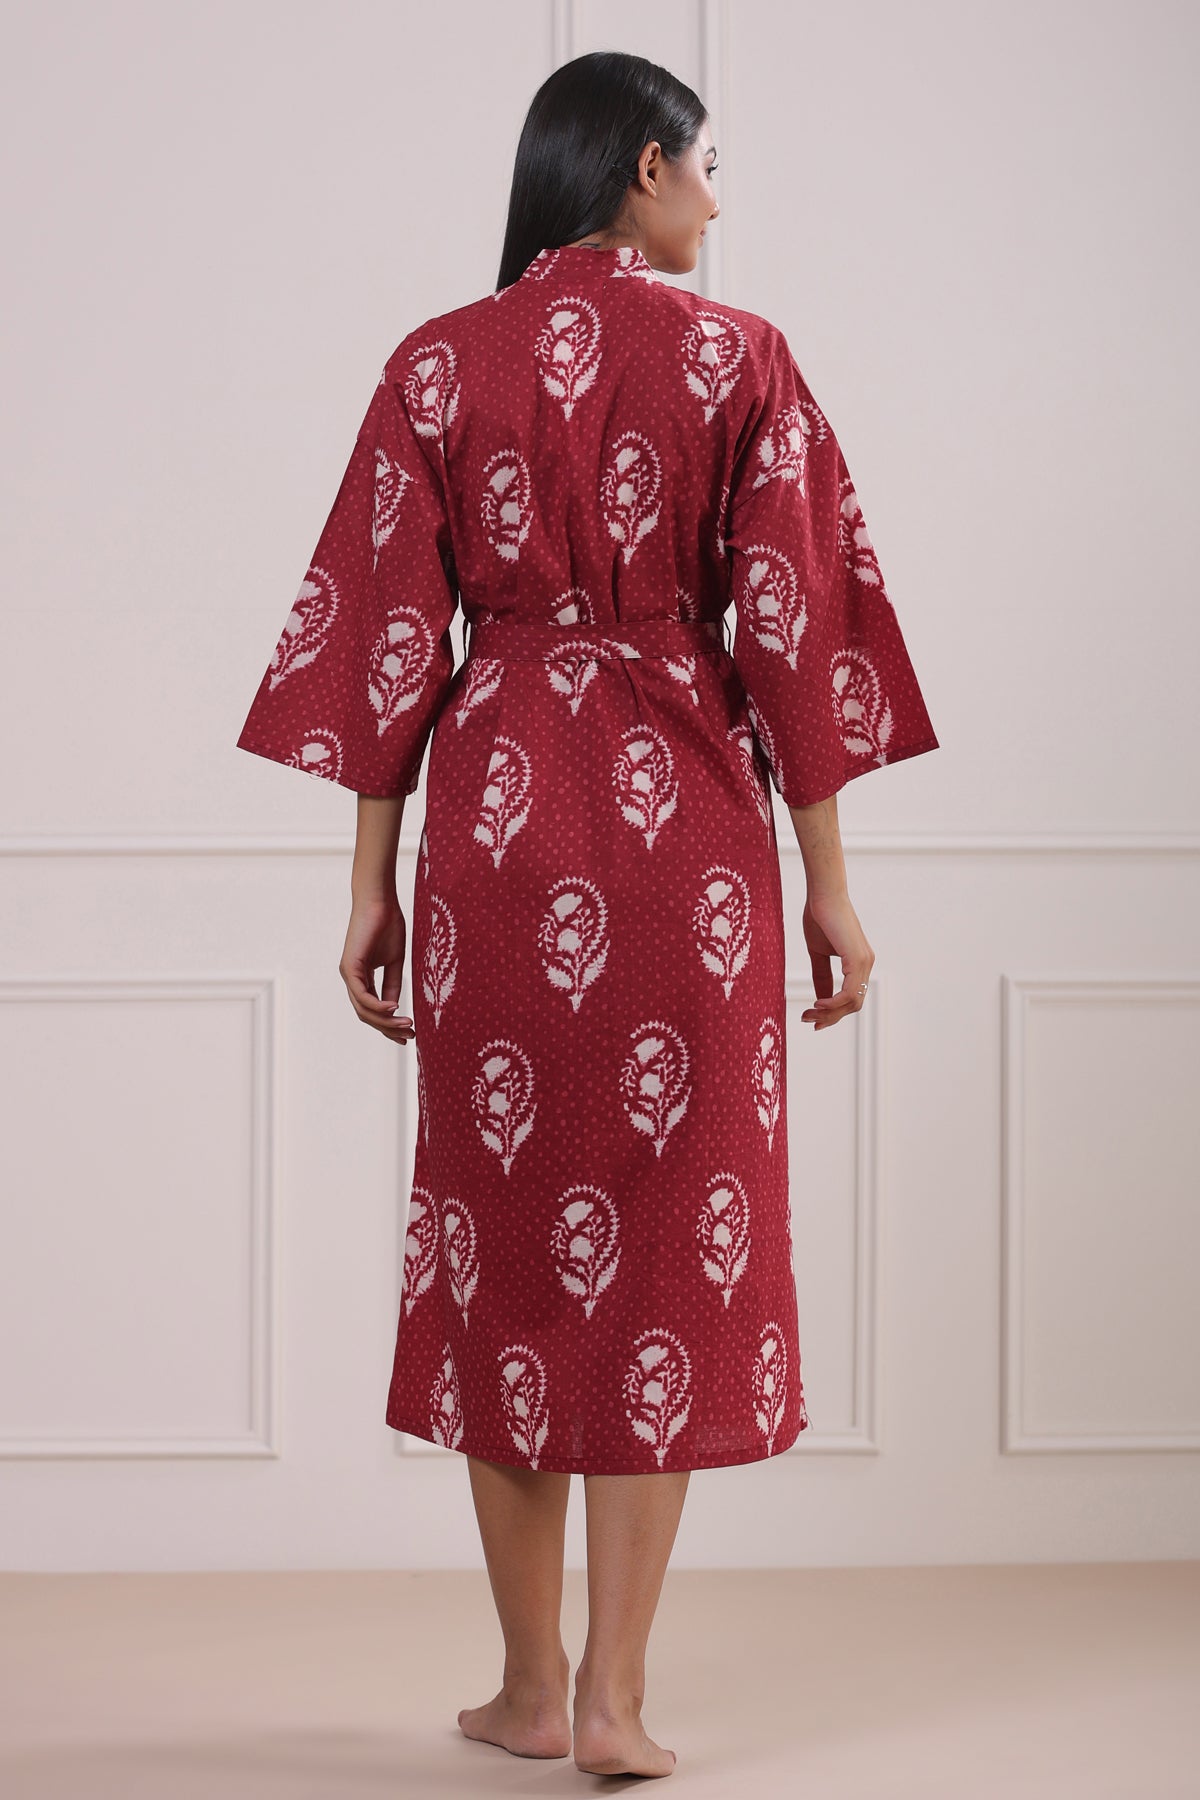 Royal Motif on Maroon Robe Dress